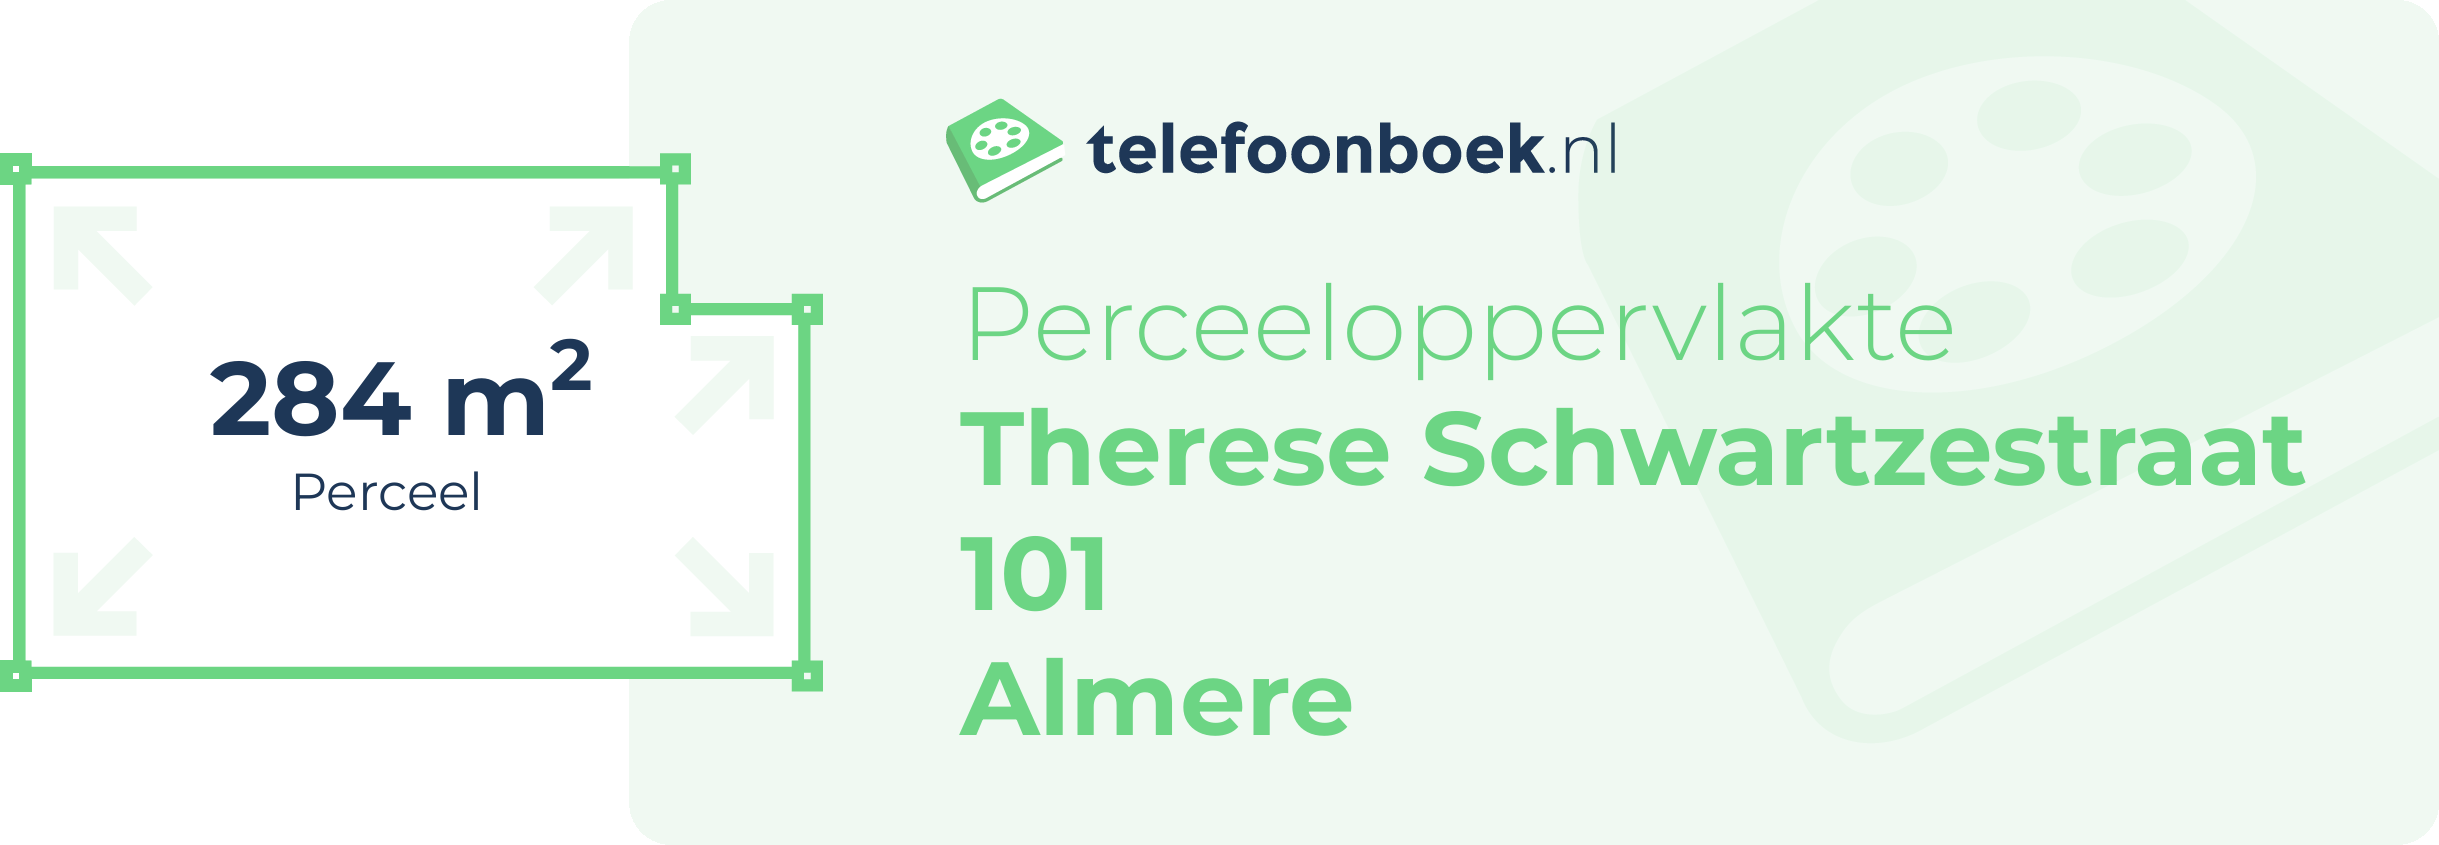 Perceeloppervlakte Therese Schwartzestraat 101 Almere